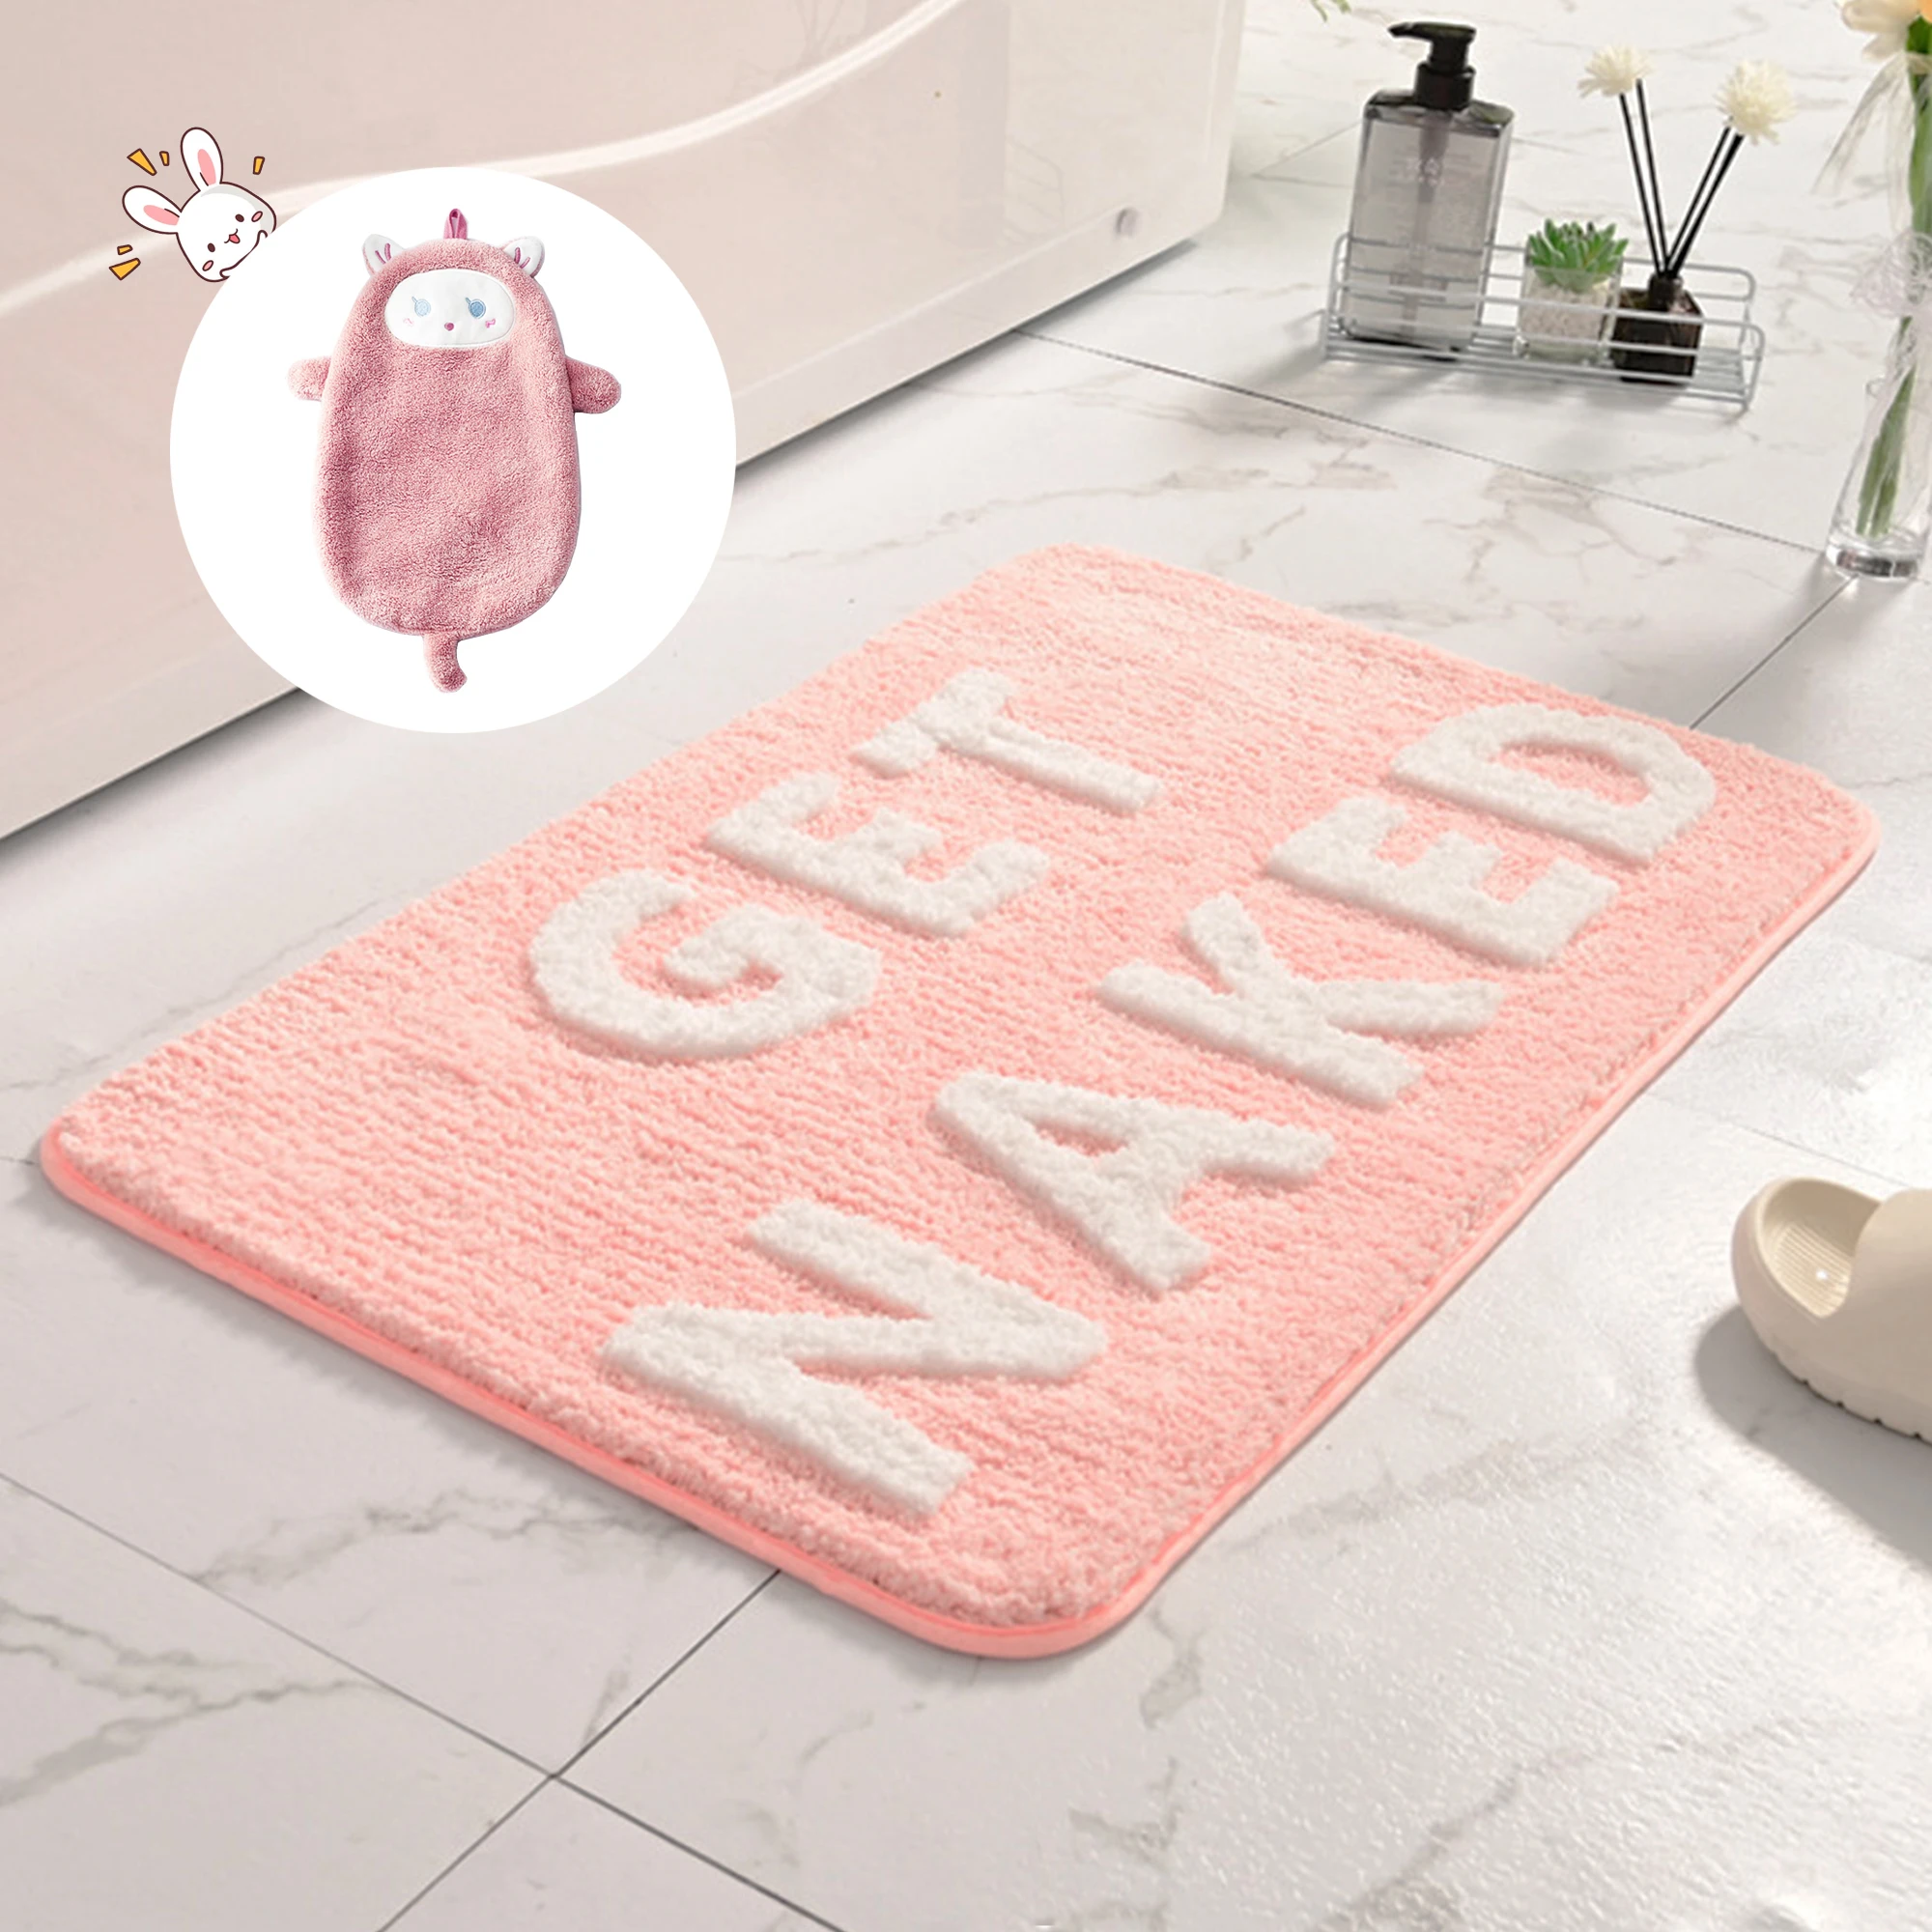 https://ae01.alicdn.com/kf/S6691b4c047c1454d9f4588f65758d44cC/Get-Naked-Bath-Mat-Cute-Pink-Bathroom-Rugs-Soft-Microfiber-and-Absorbent-Funny-Bath-Mats-32.jpg